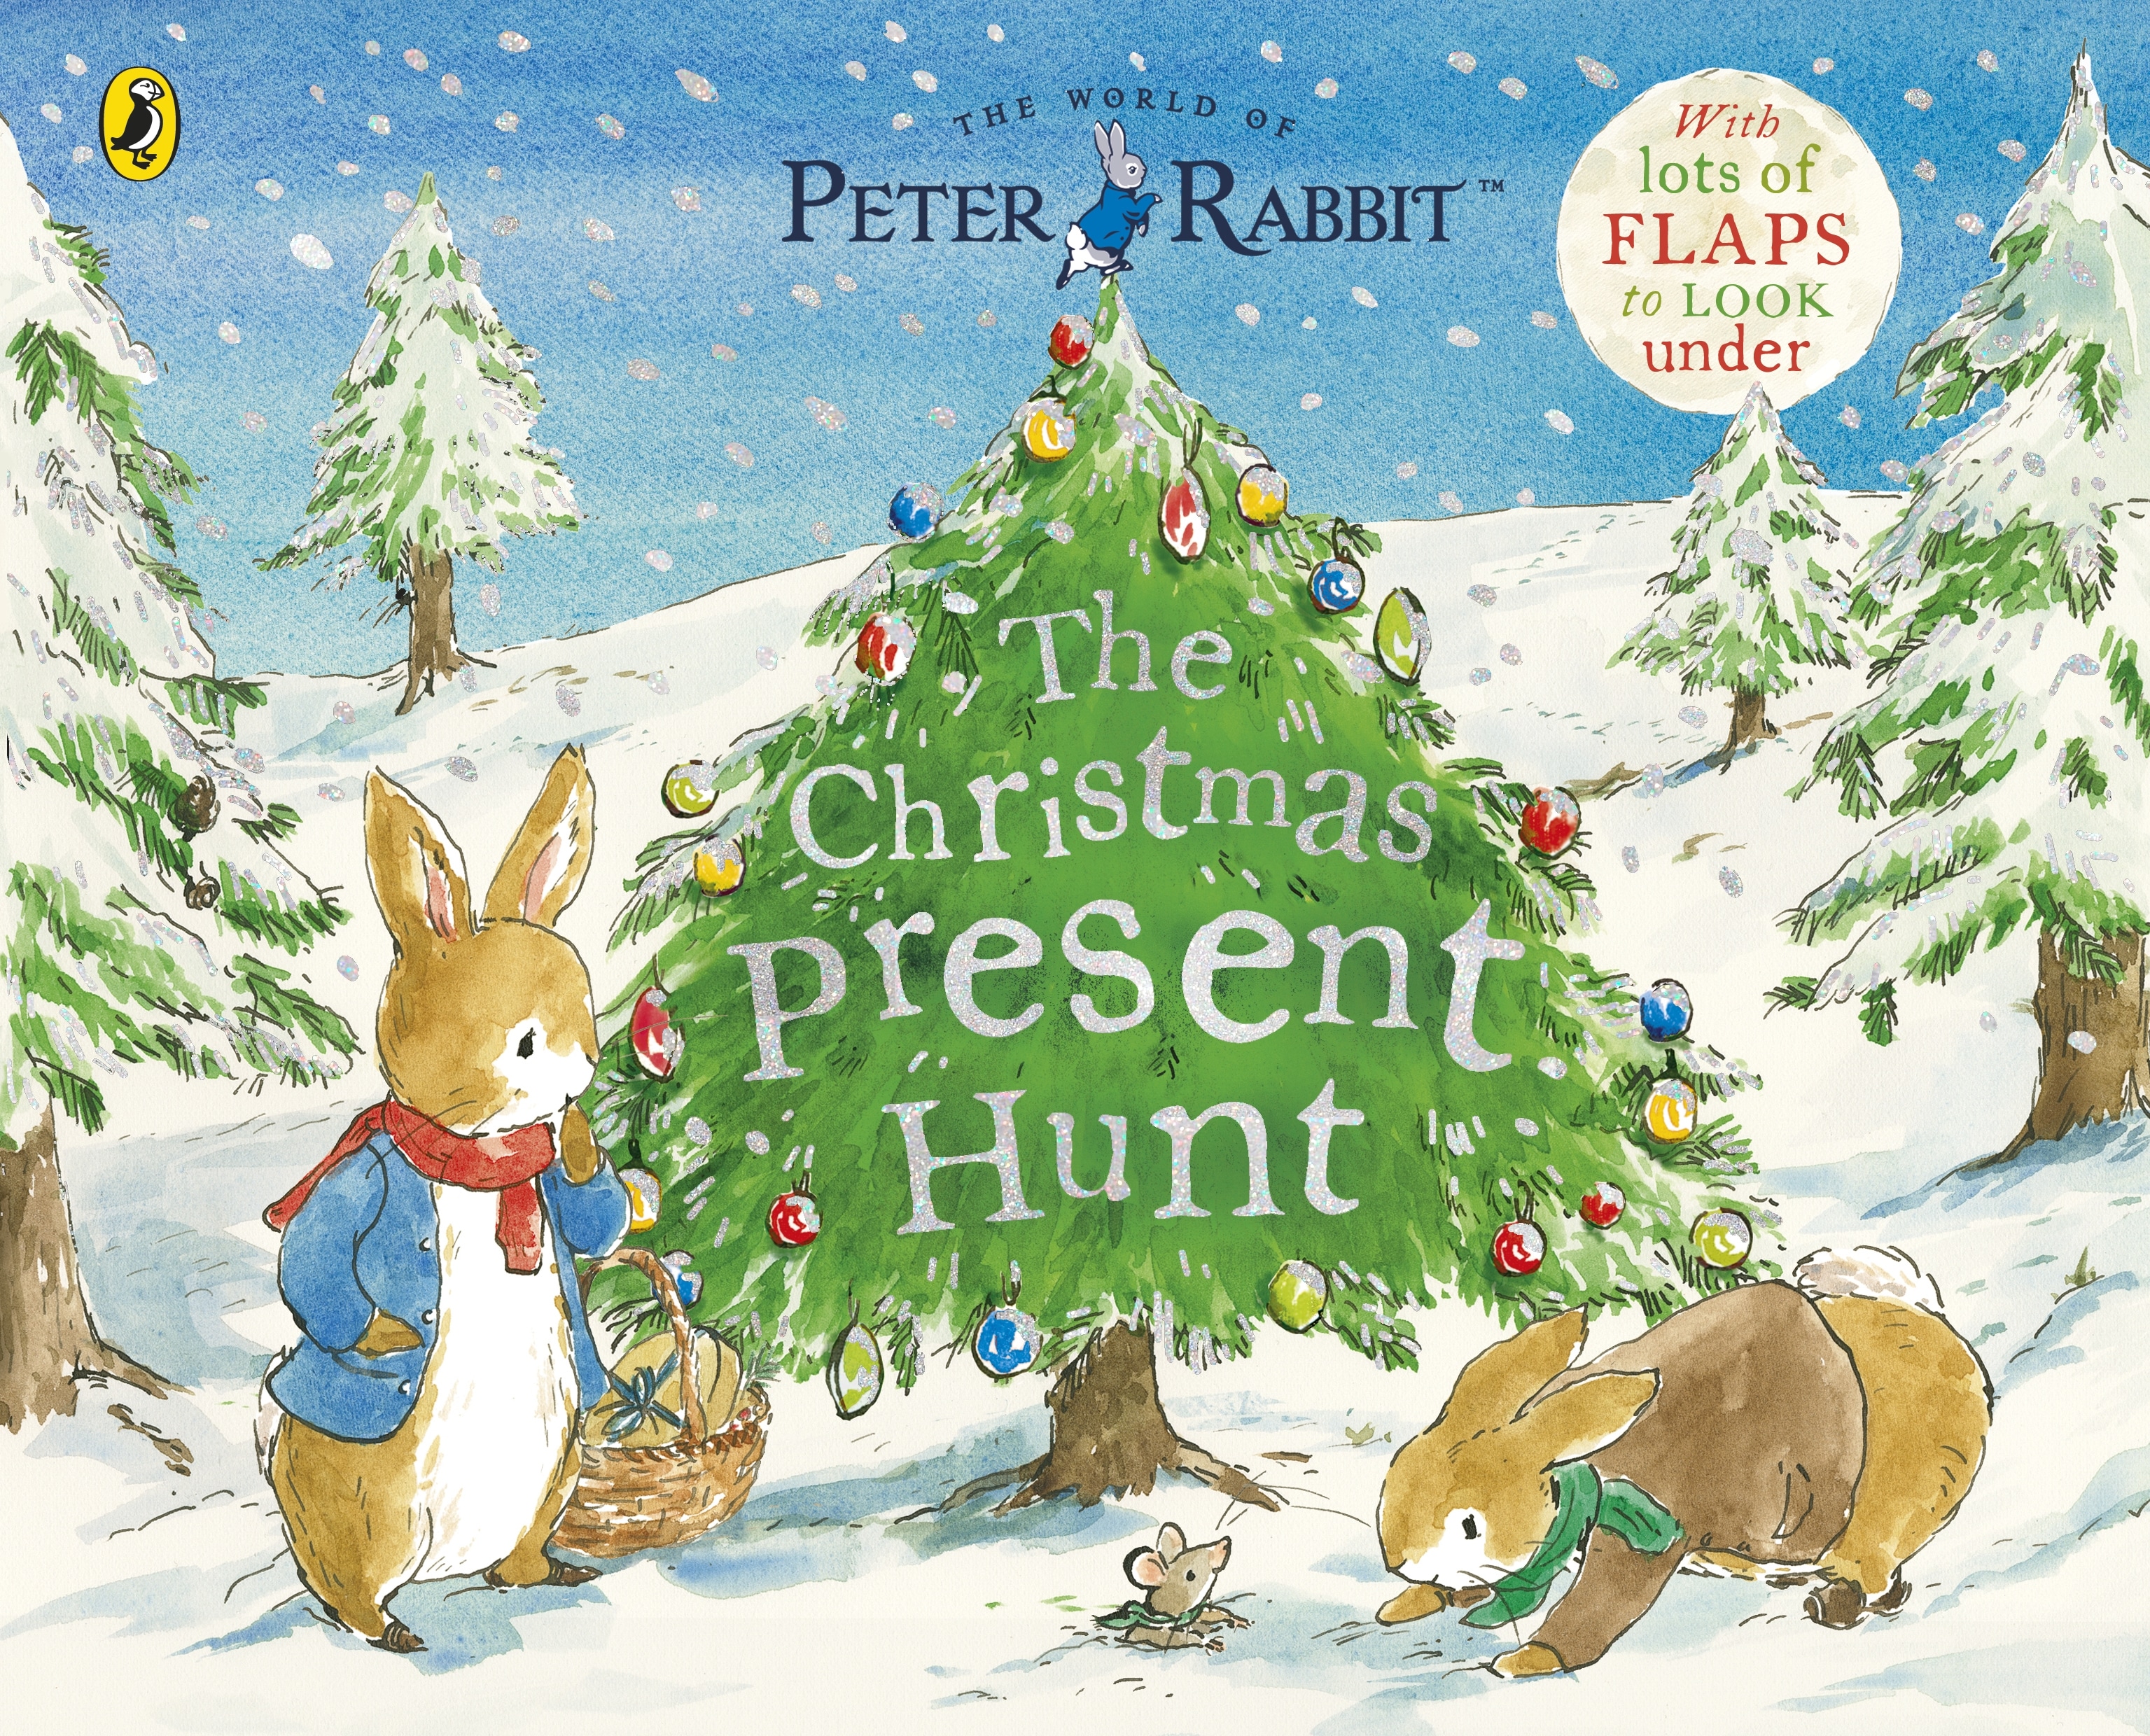 Book “Peter Rabbit The Christmas Present Hunt” by Beatrix Potter — November 11, 2021